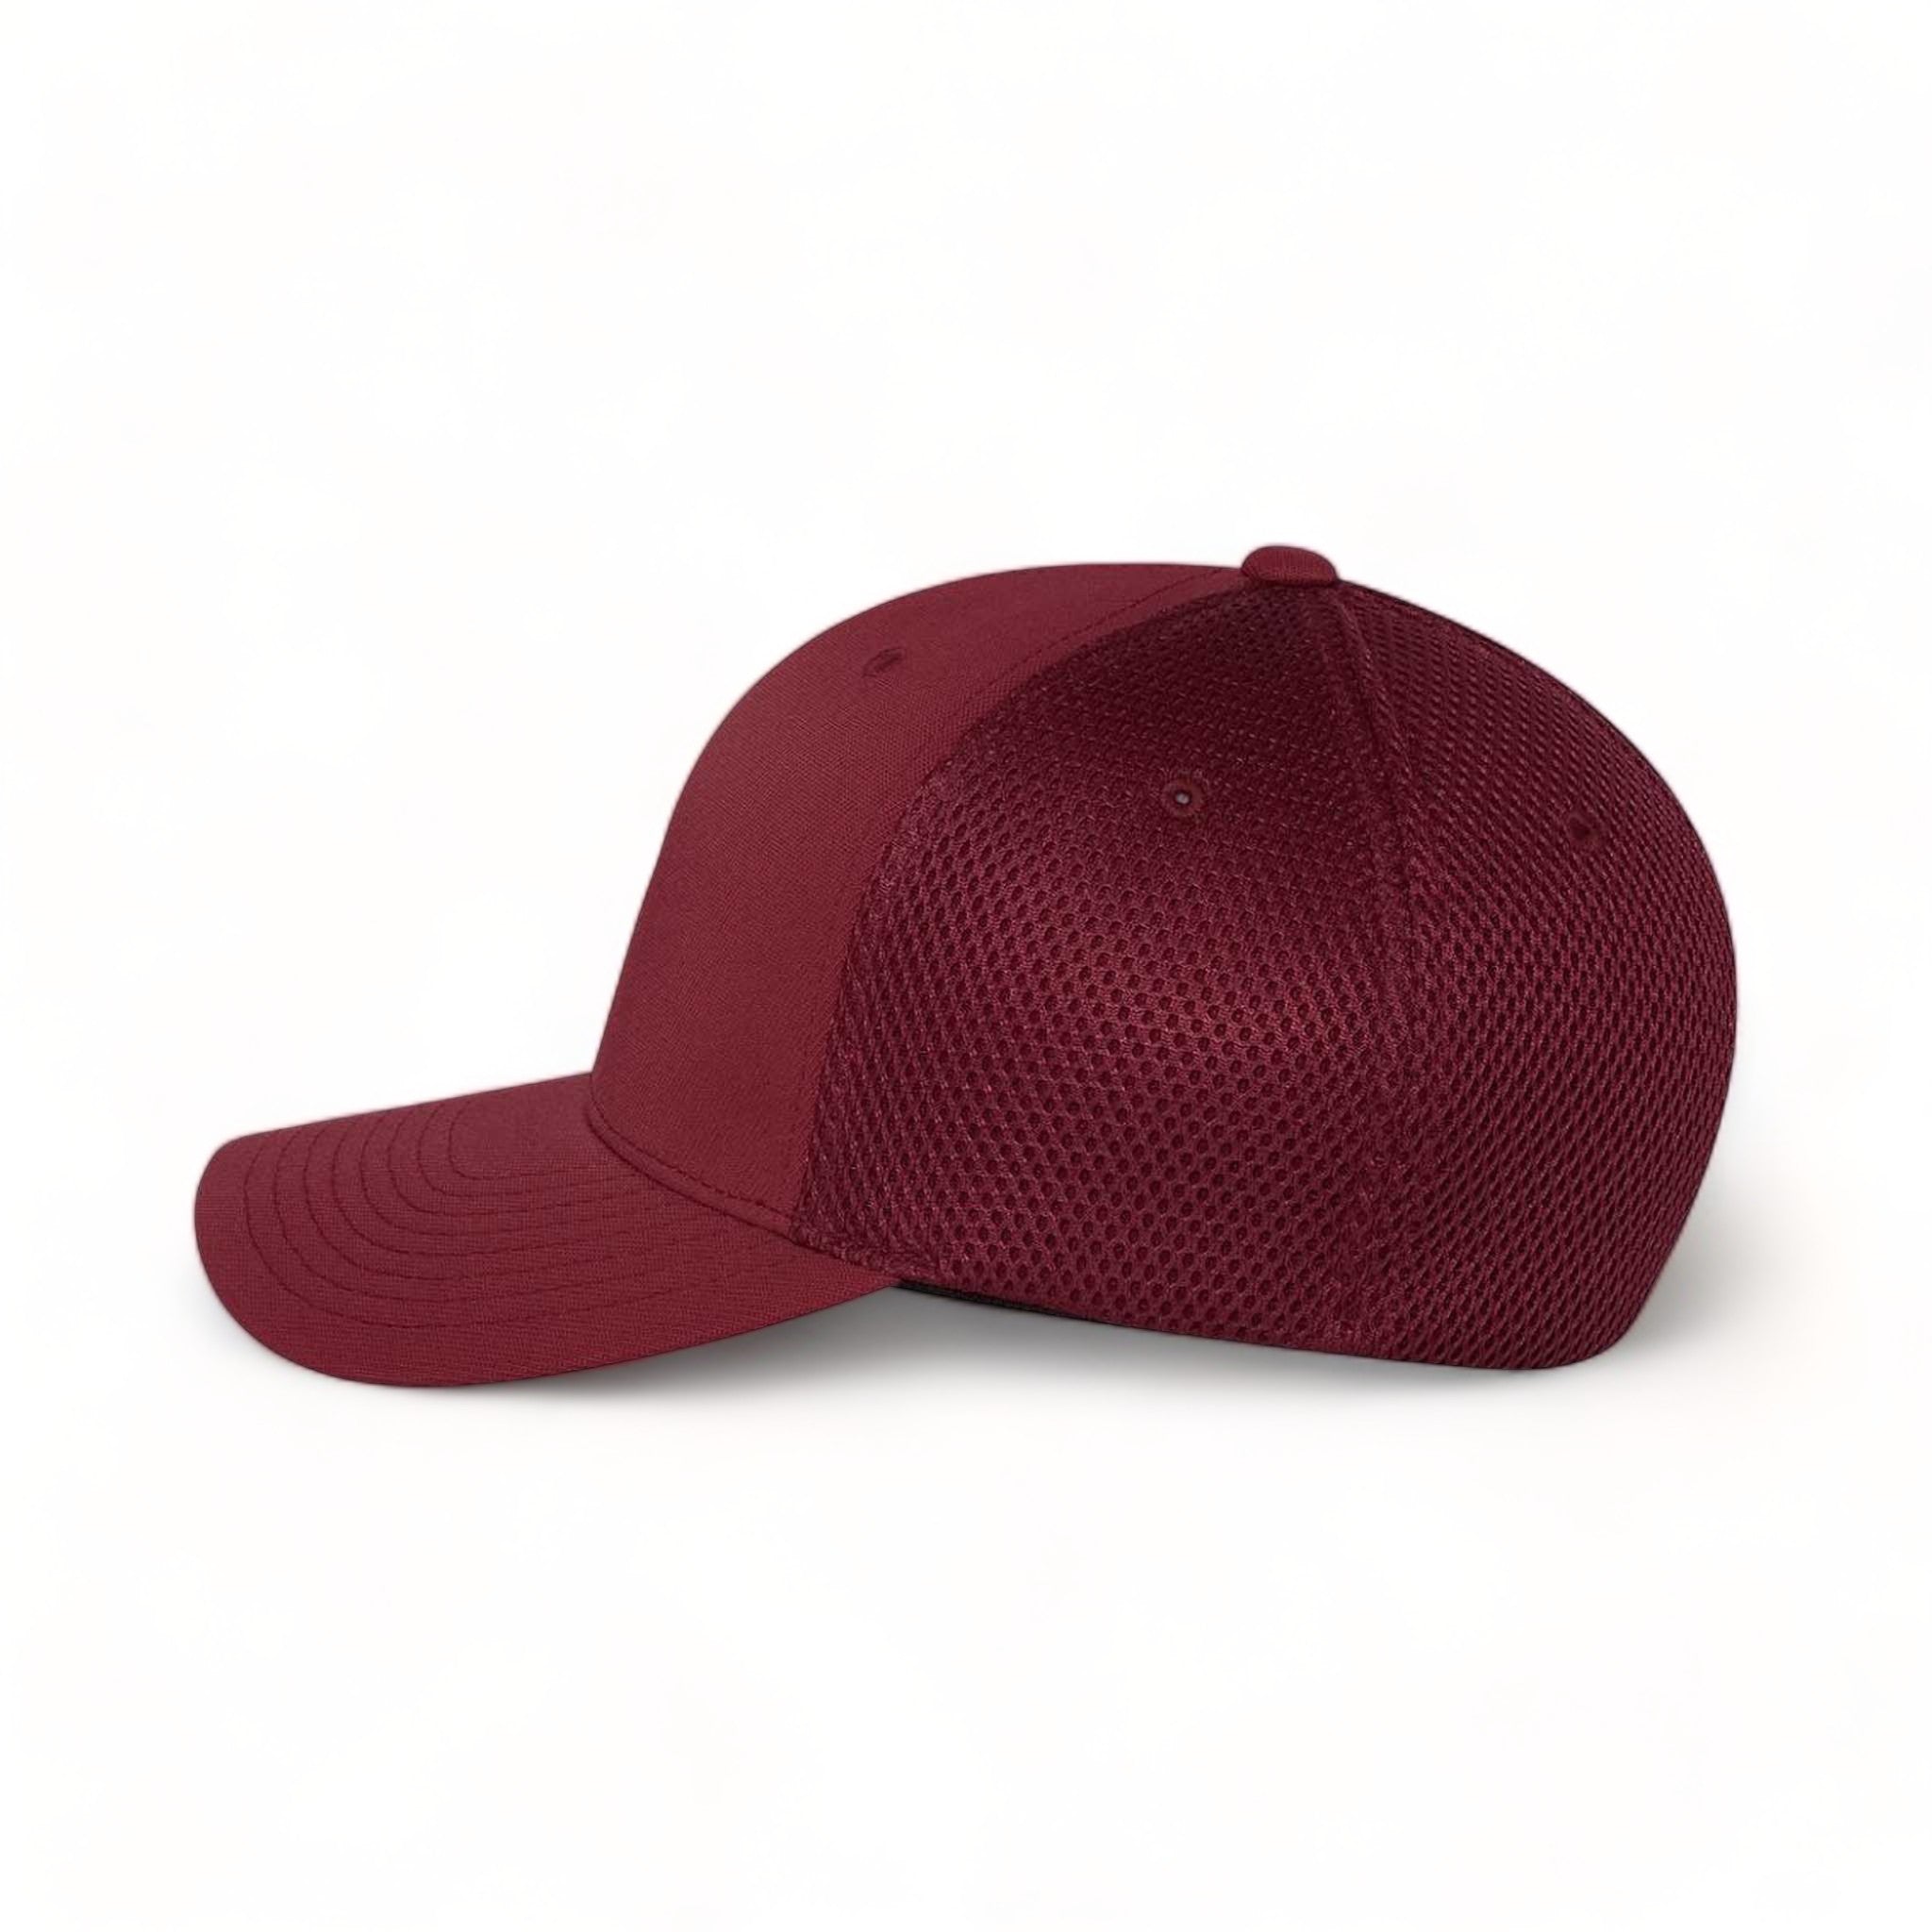 Side view of Flexfit 6533 custom hat in maroon